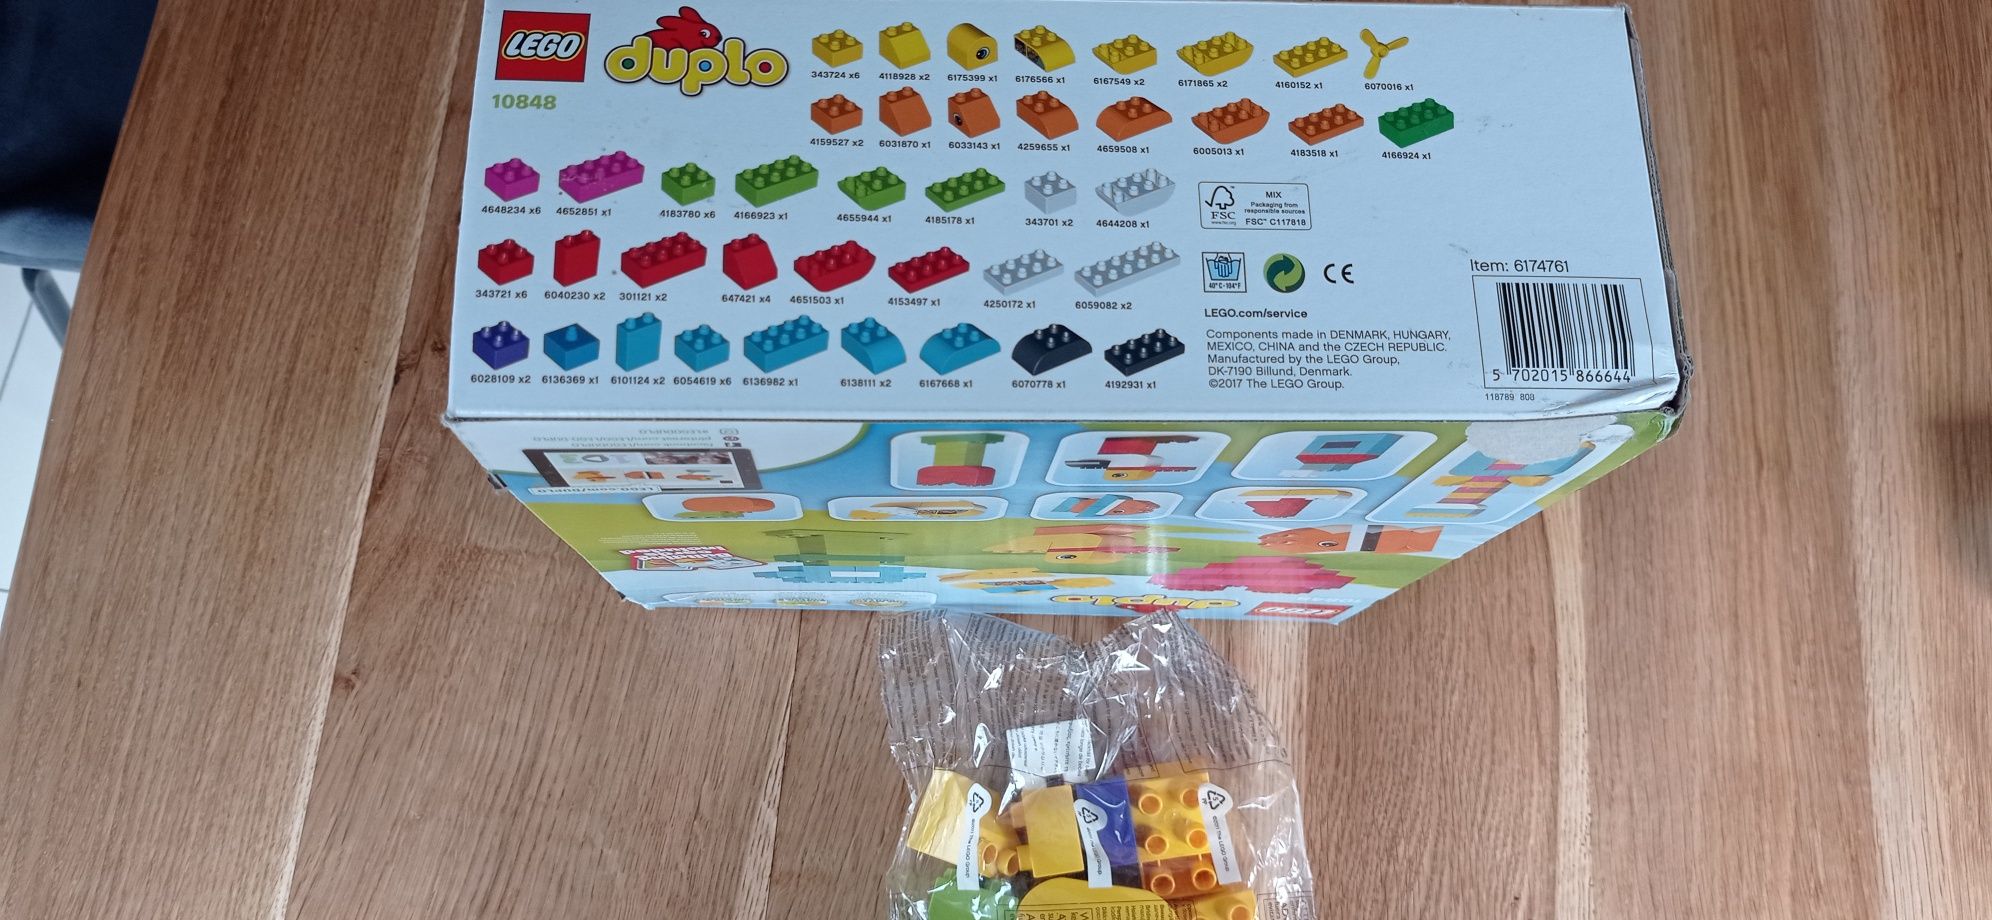 LEGO Duplo imagine and create